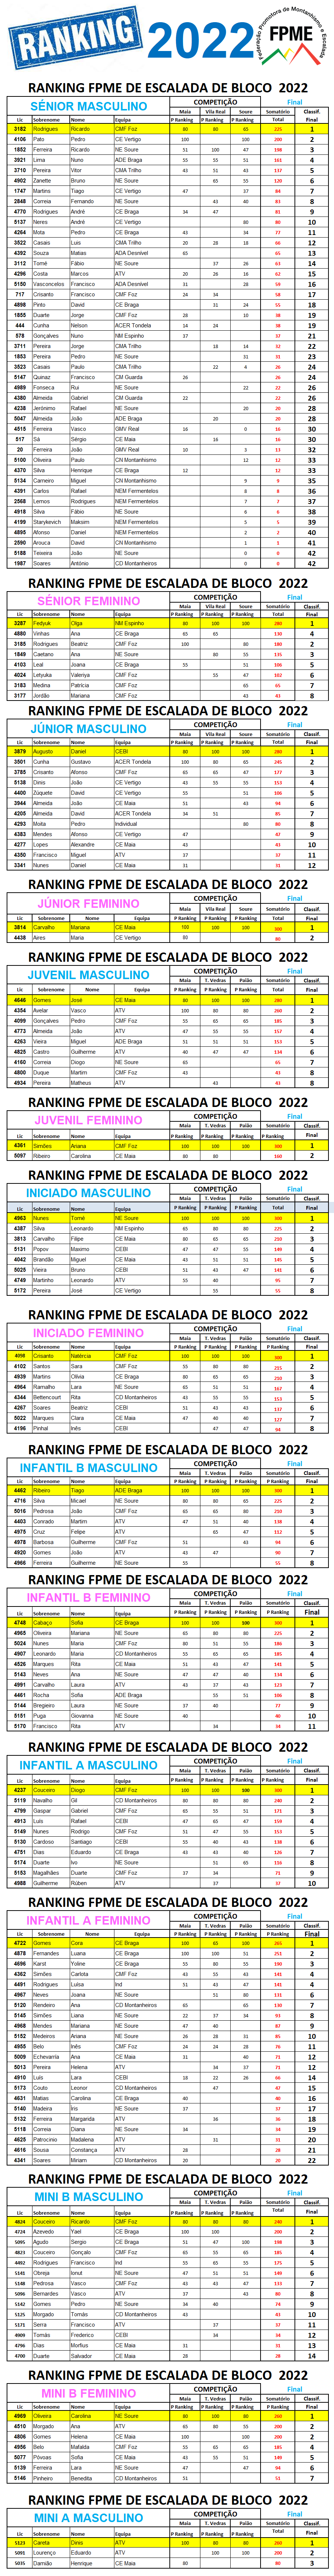 Ranking Final 2022